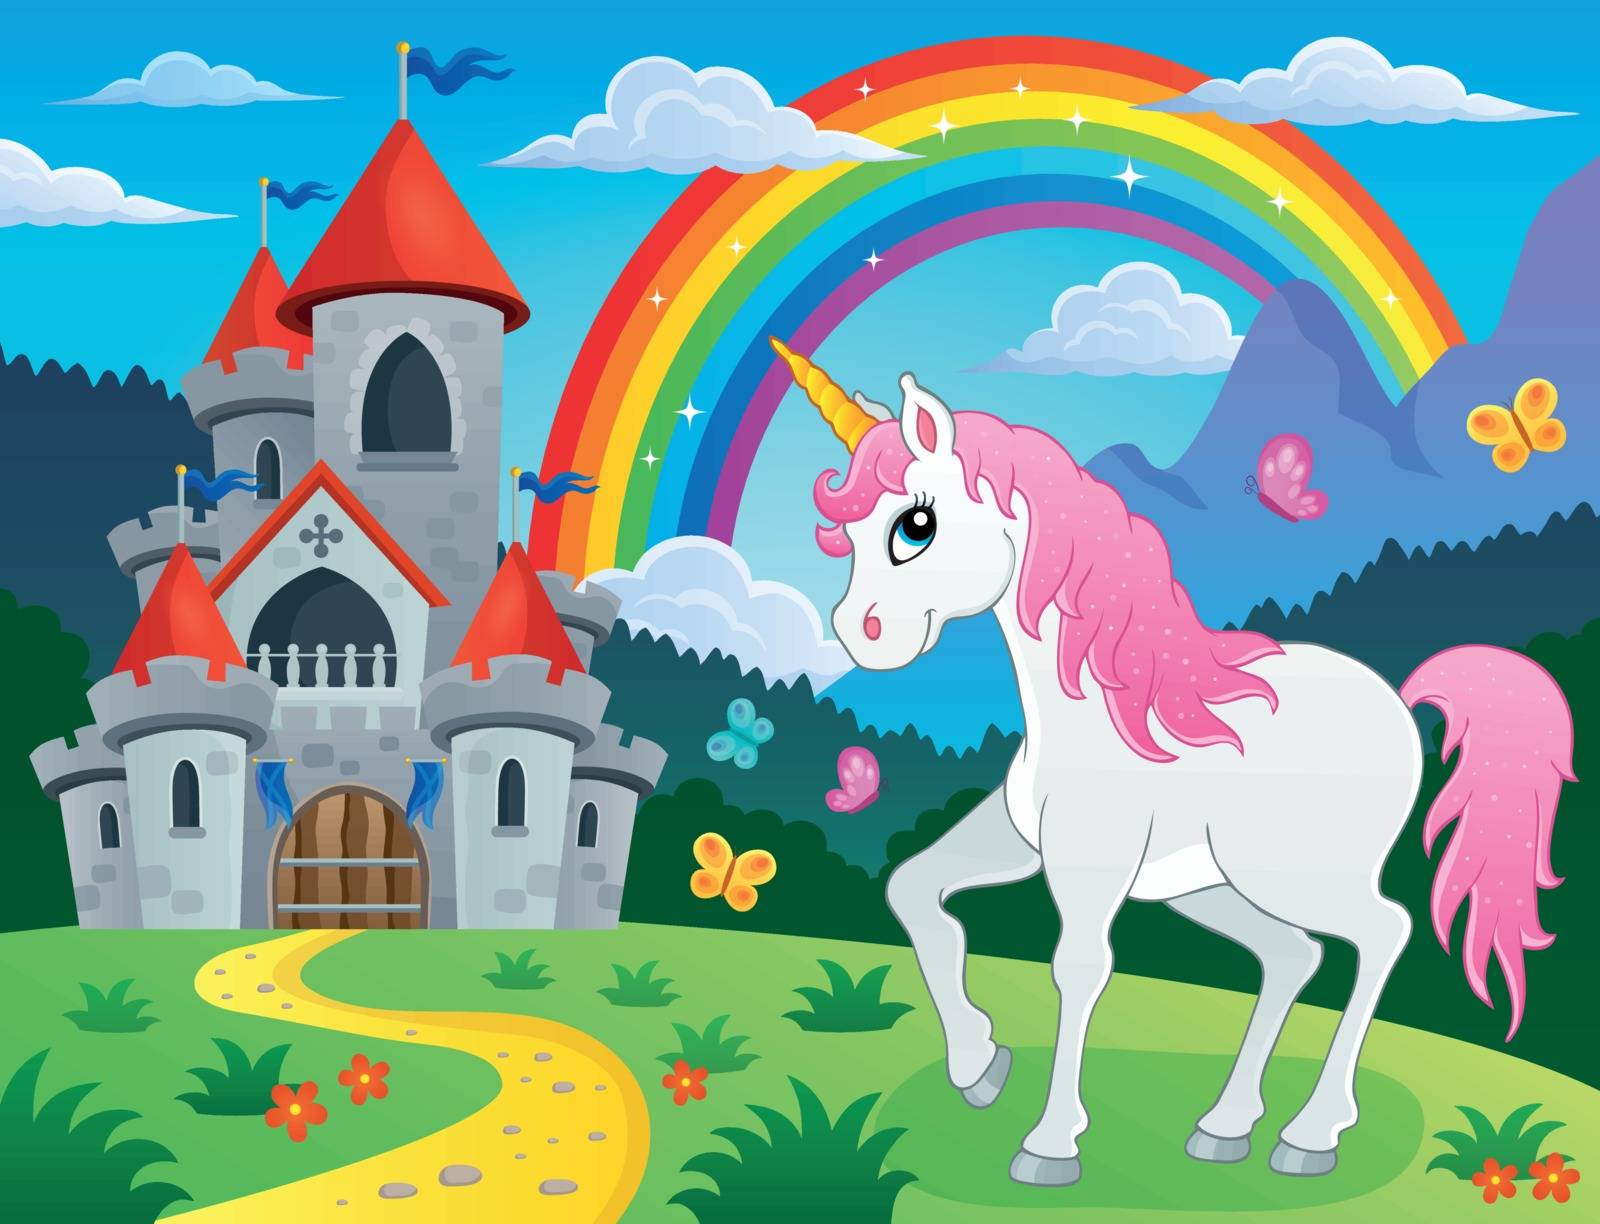 Fairy tale unicorn theme image 4 - eps10 vector illustration.